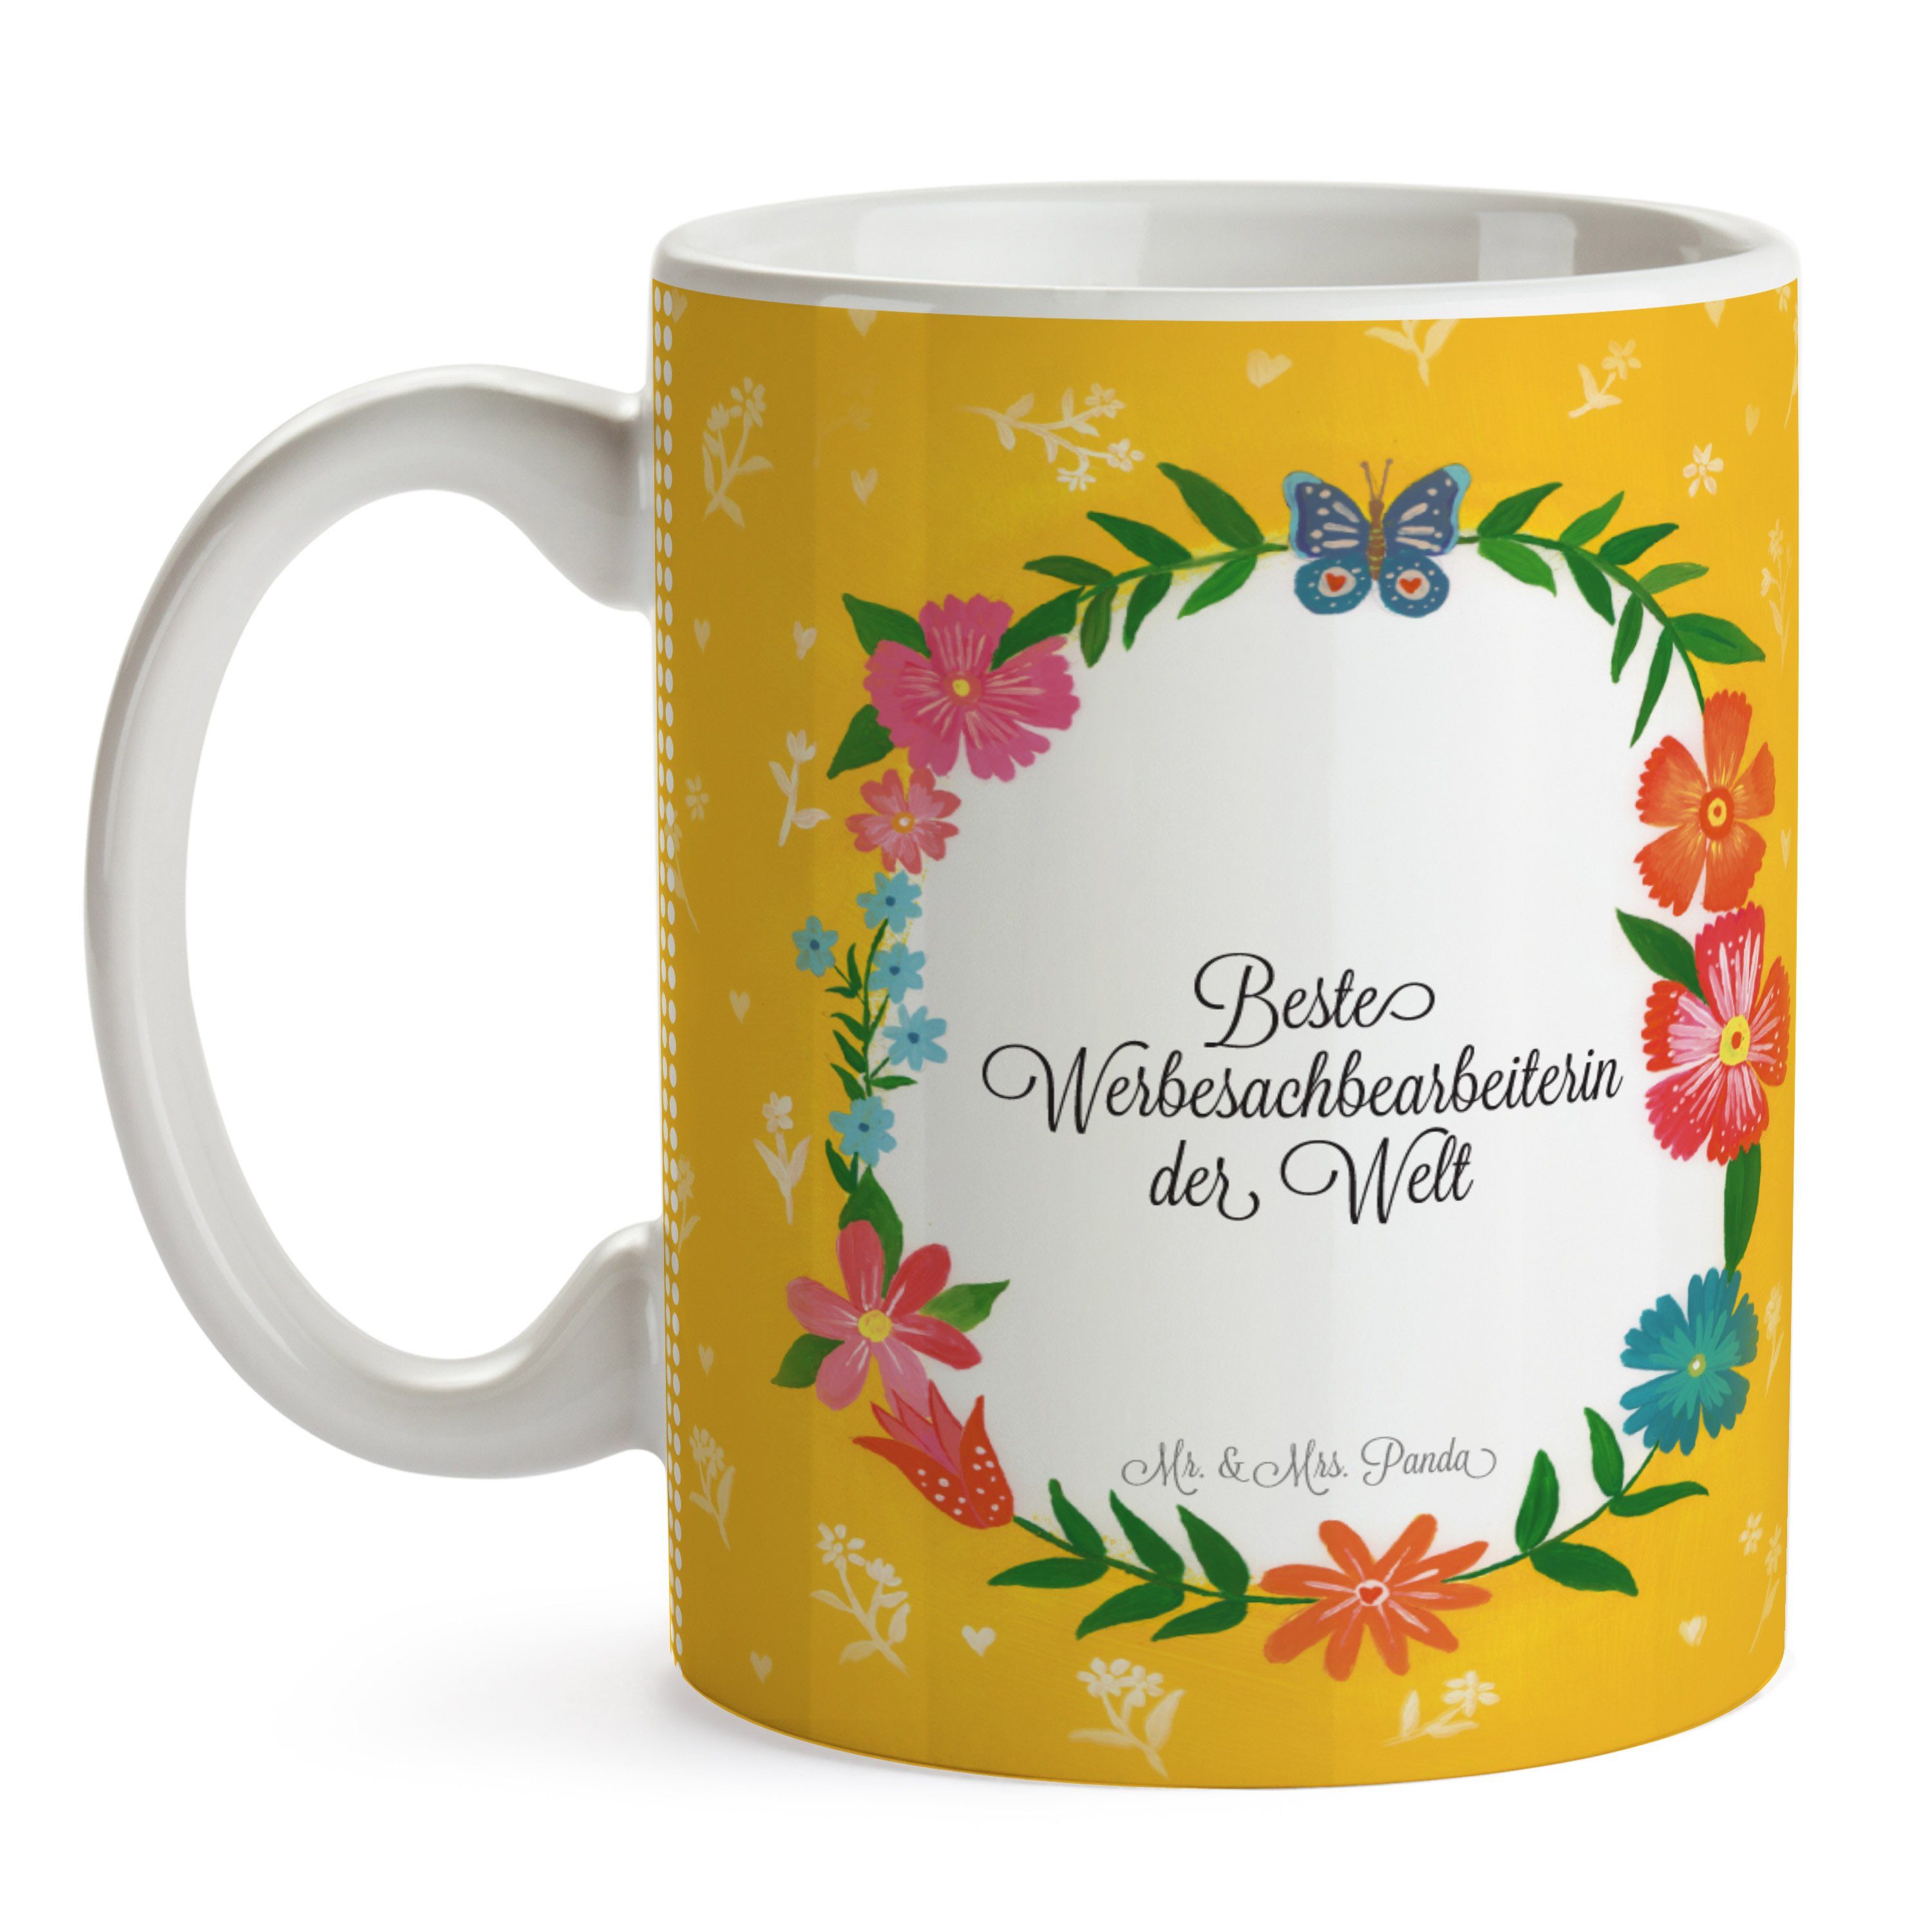 Mr. & Mrs. Panda - Werbesachbearbeiterin Keramik Keramikt, Geschenk, Tasse Kaffeebecher, Gratulation